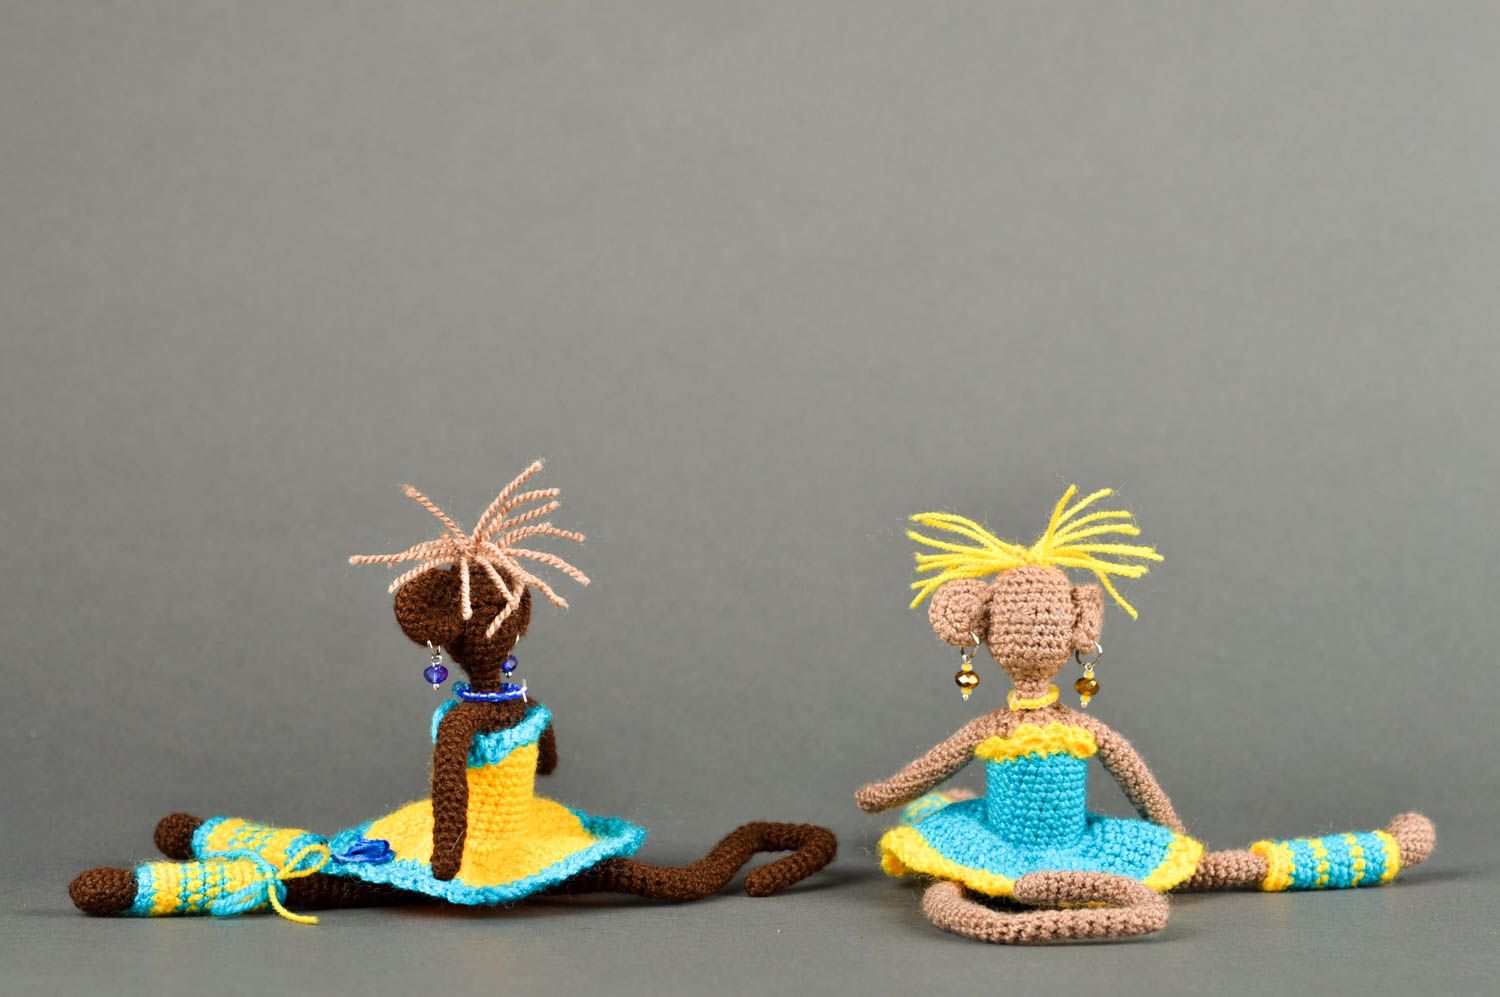 Handmade crocheted toys creative toys for children trendy toys nursery decor photo 3